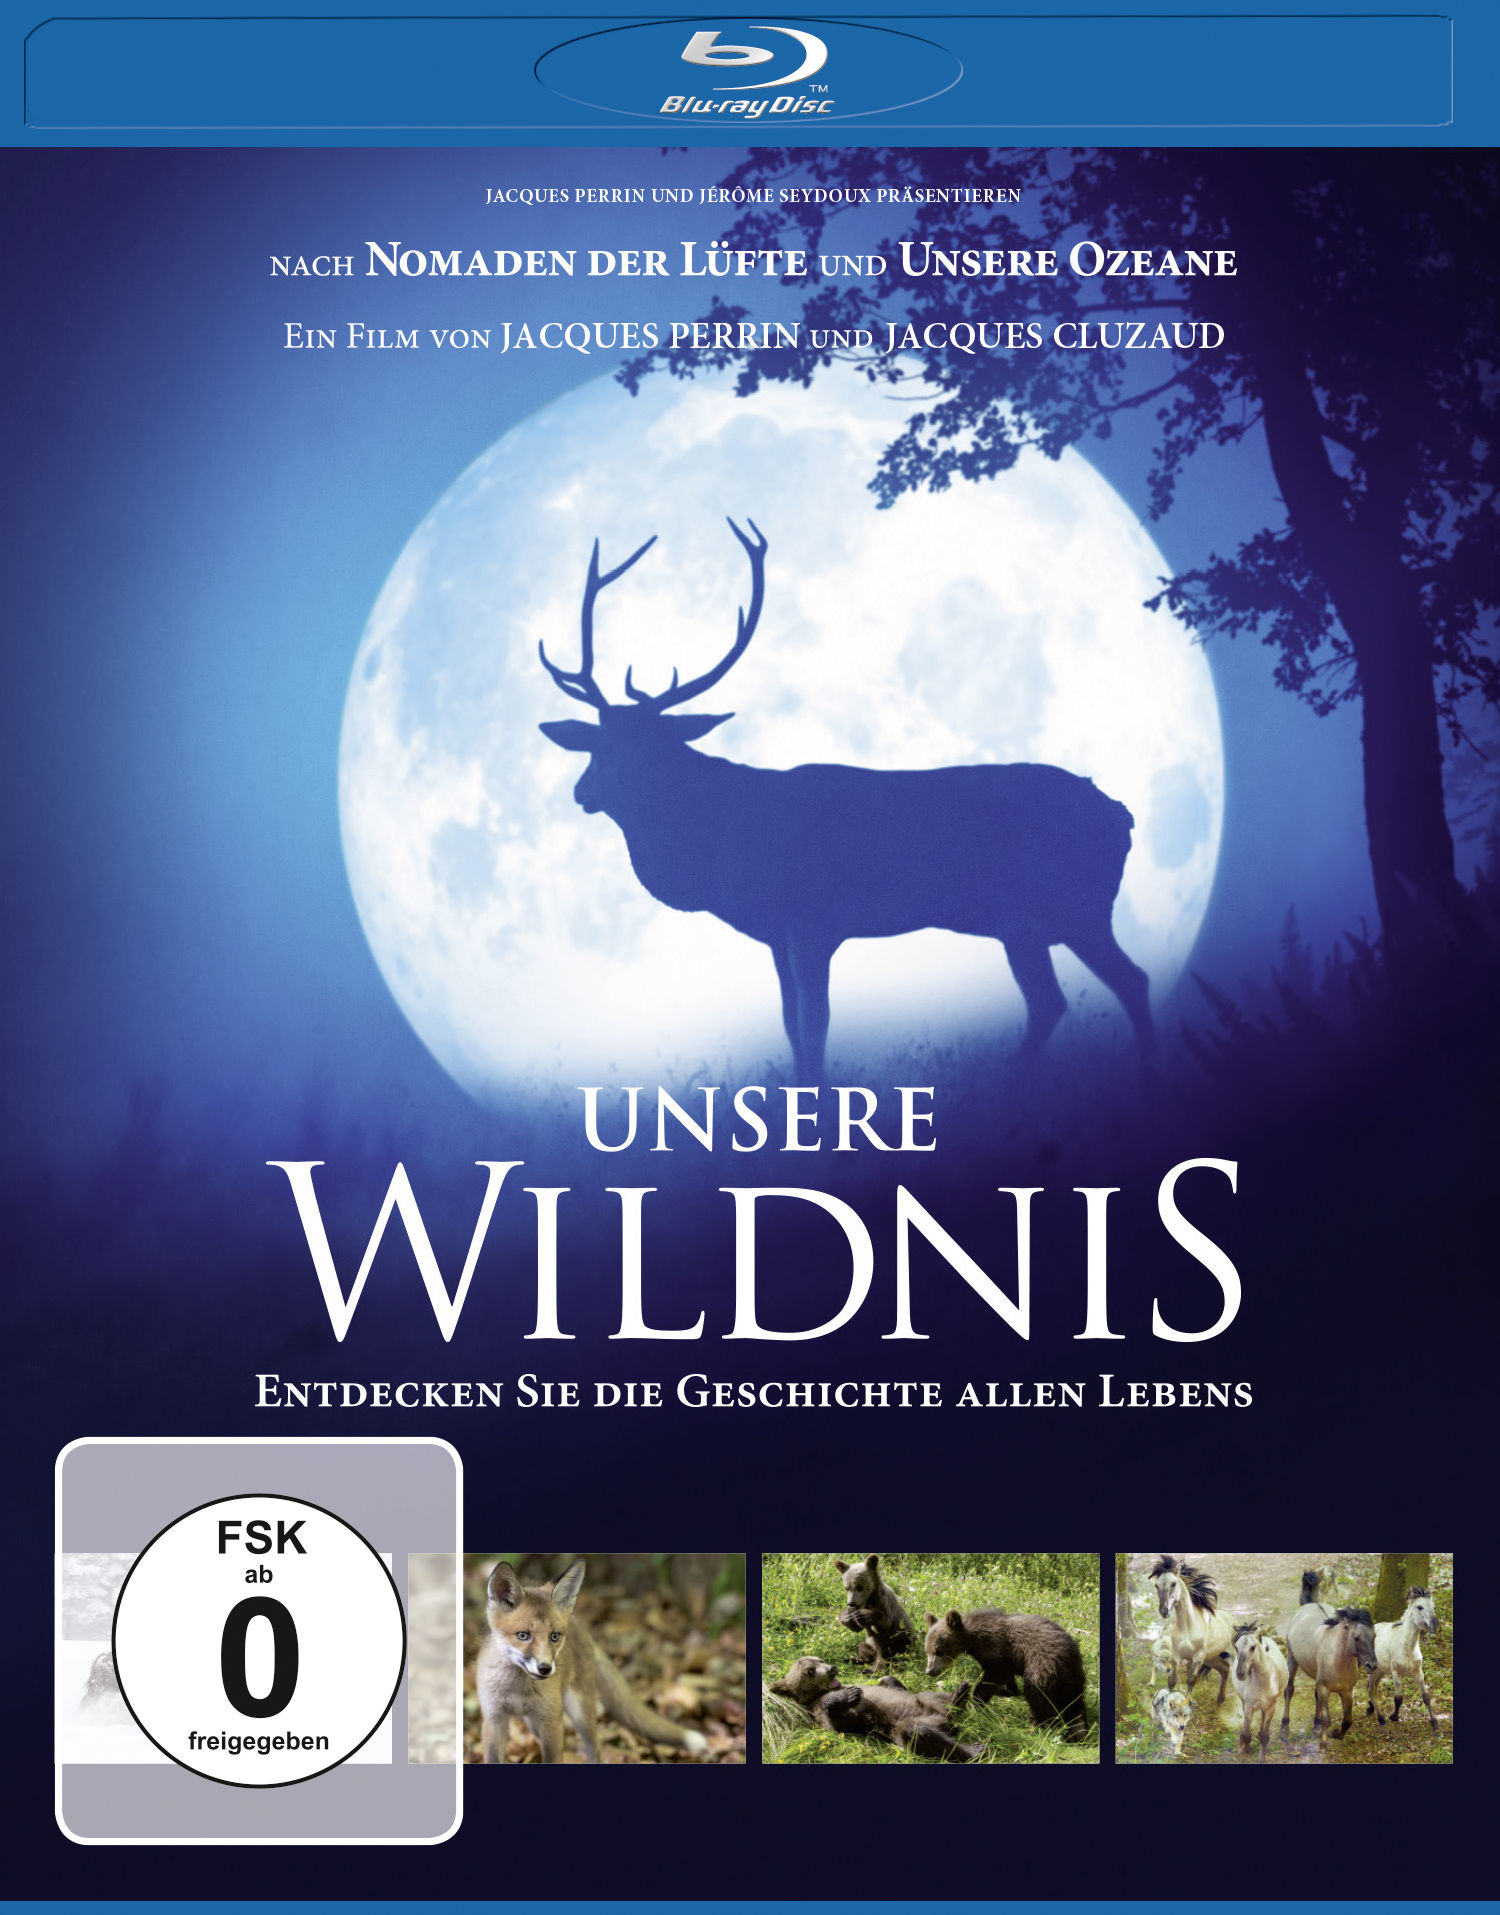 Blu-ray Wildnis Unsere